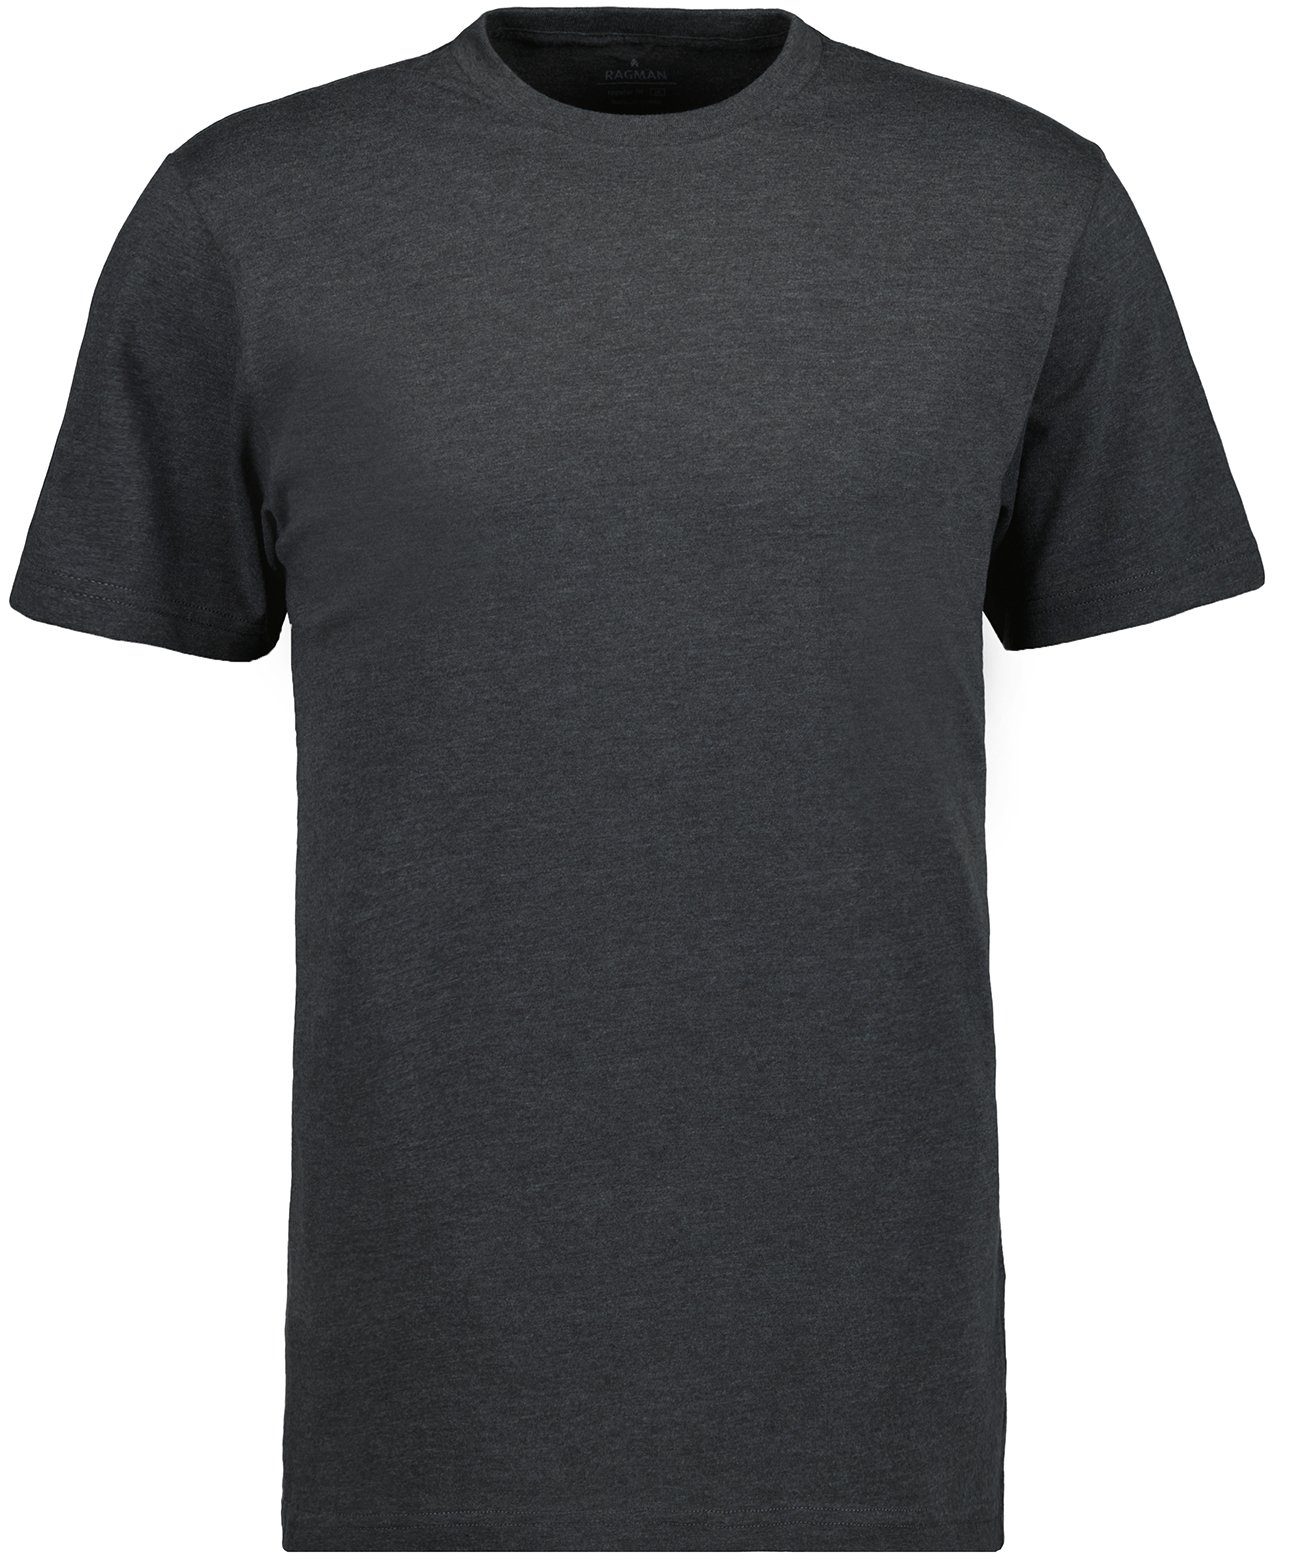 RAGMAN T-Shirt Anthrazit